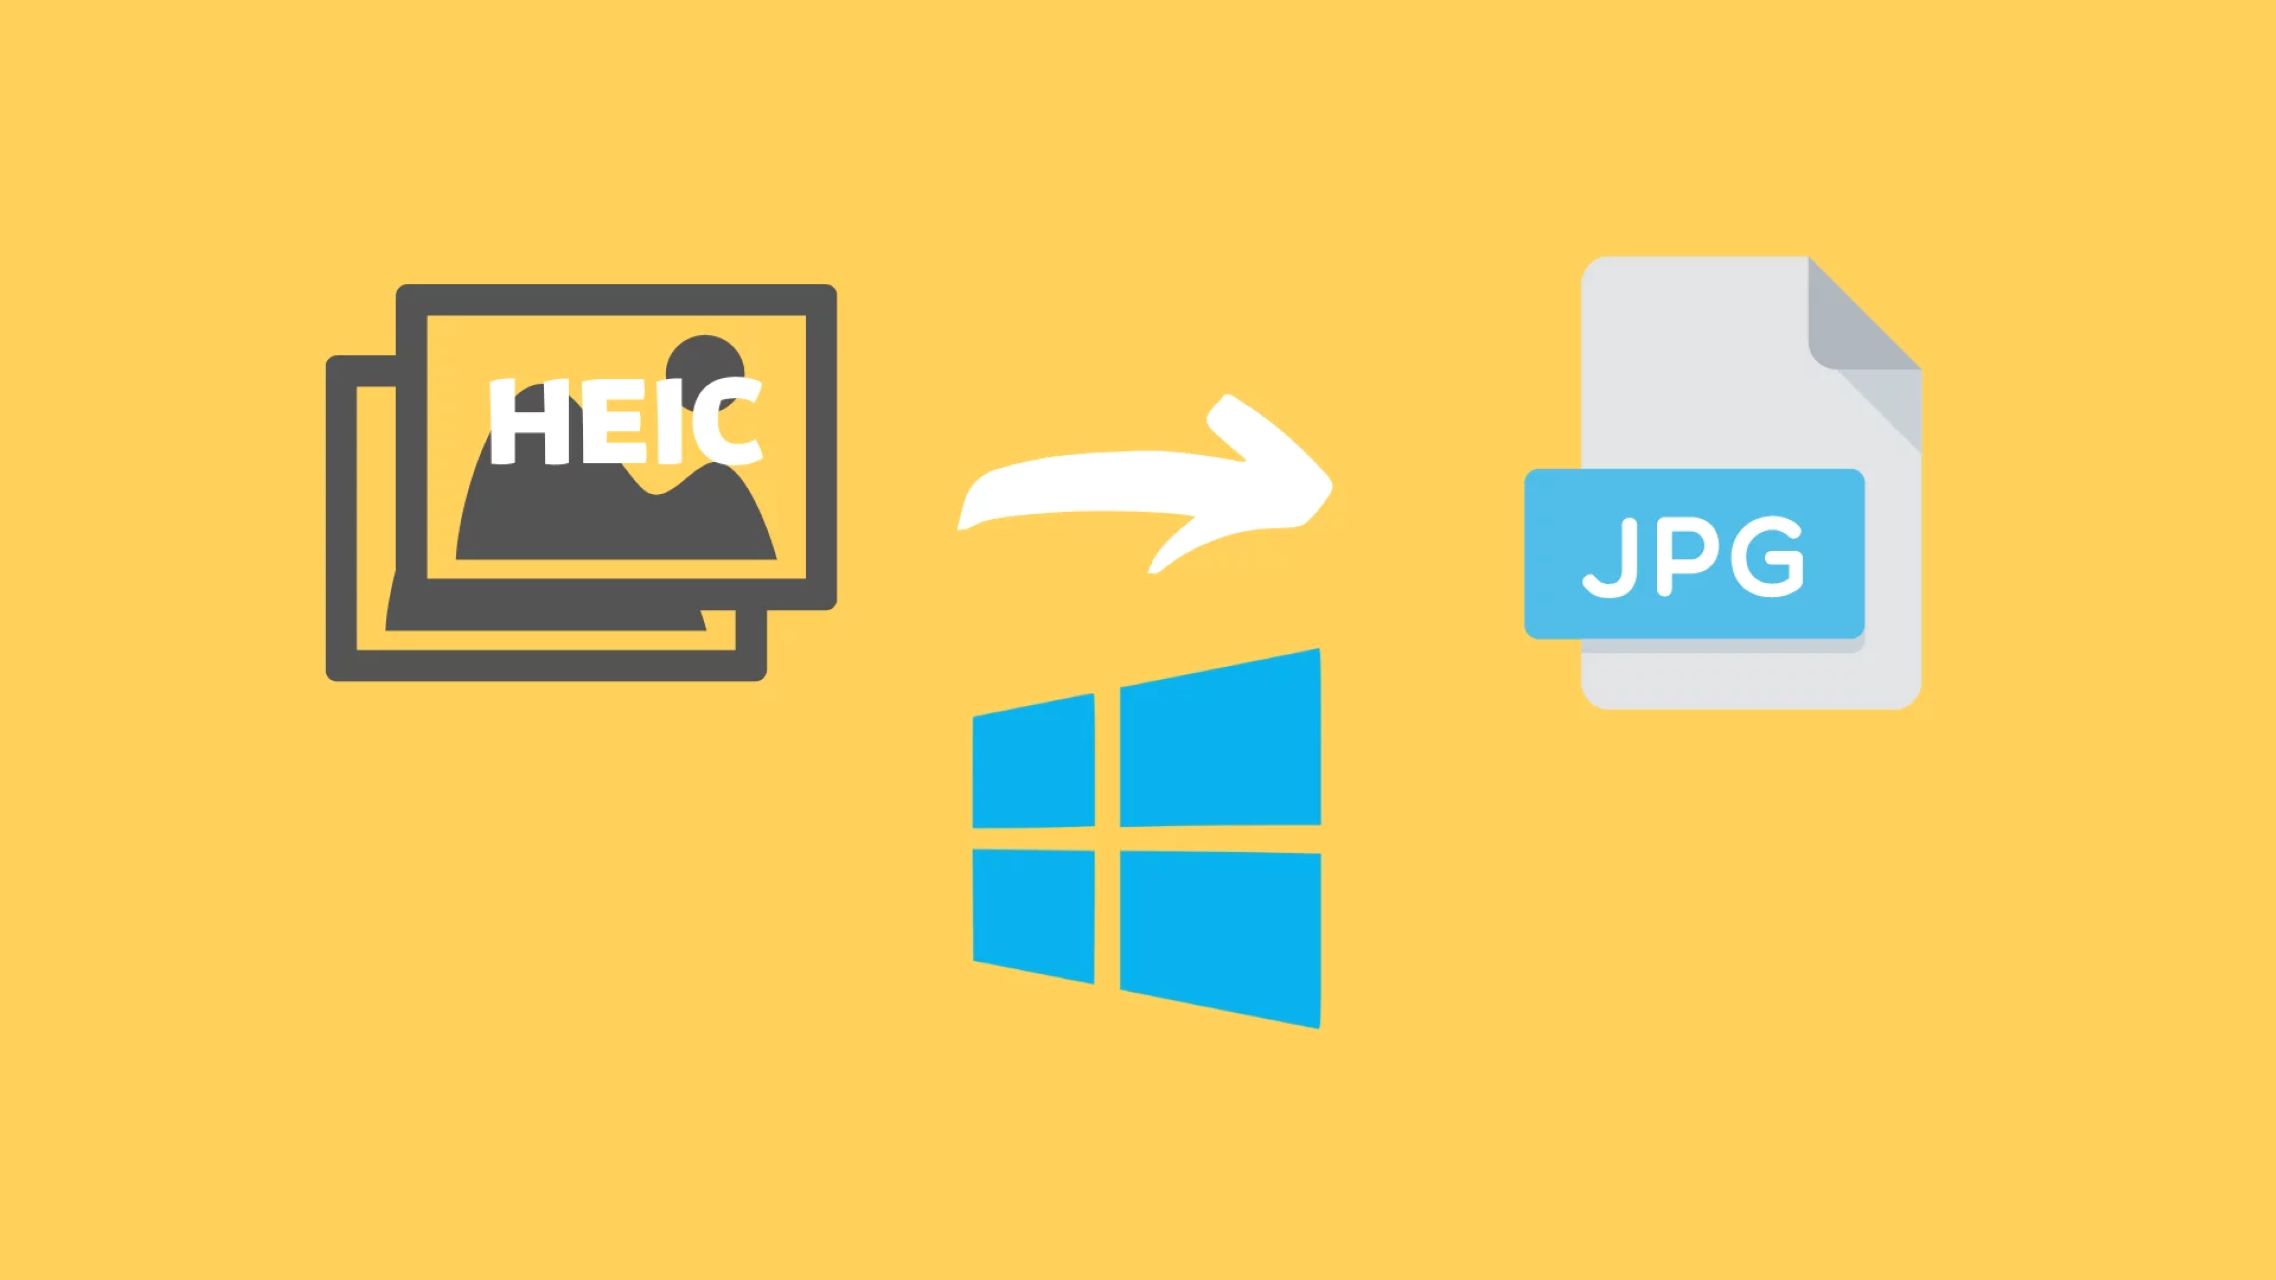 How To Convert HEIC To JPG On Windows